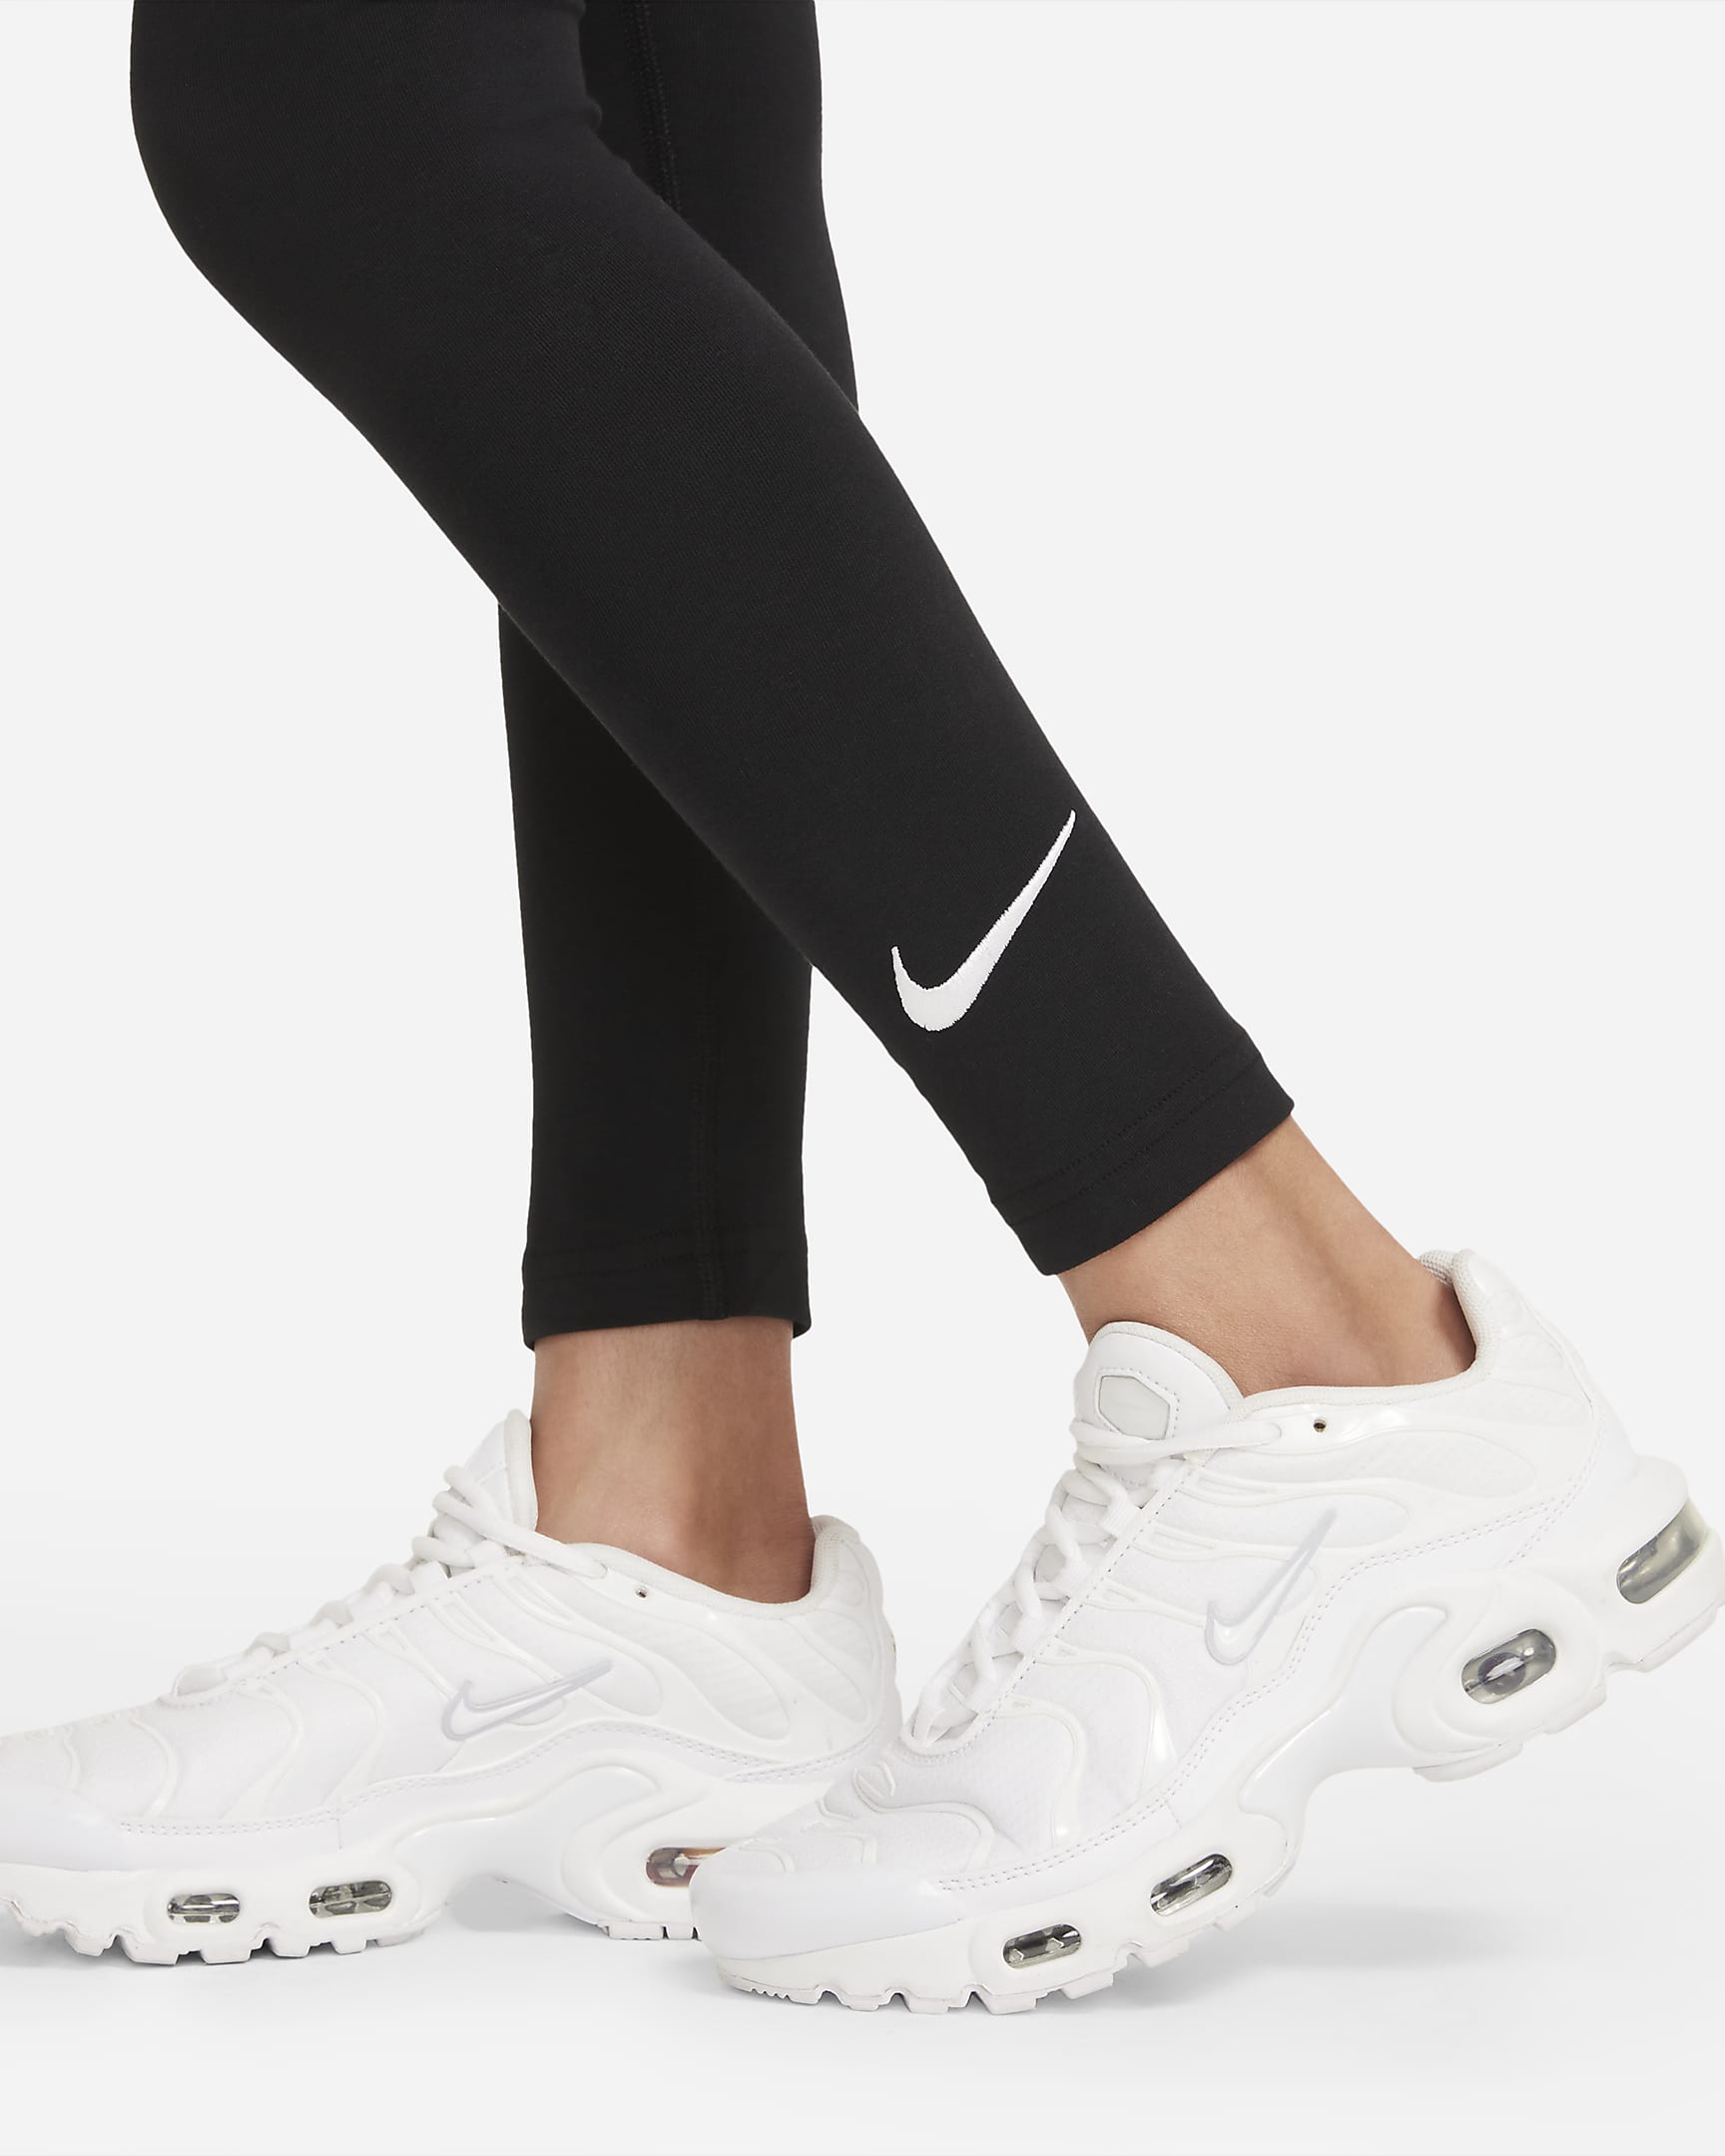 Girls Nike Sportswear Favourites Leggings - DD6482 – The Sports Center